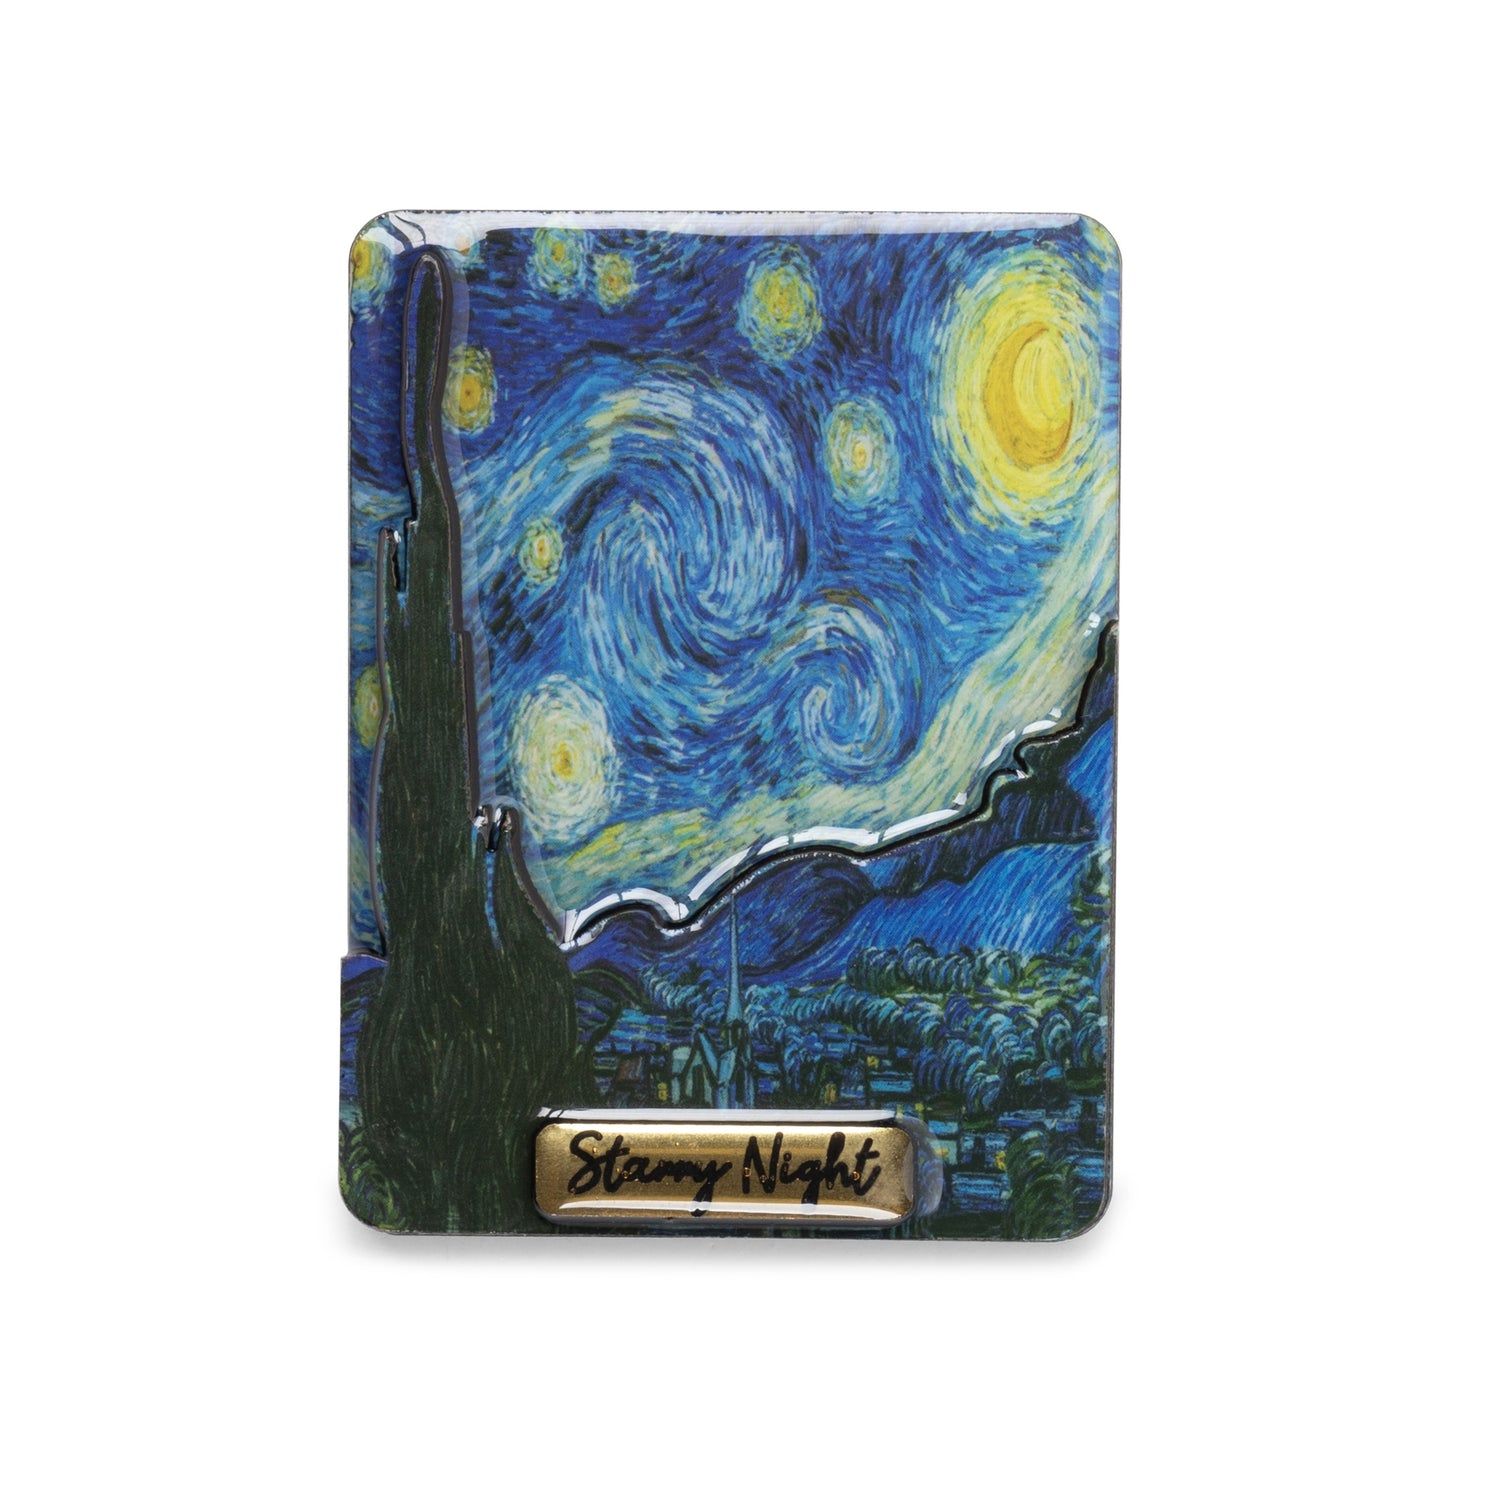 Magnet - Starry night - van Gogh